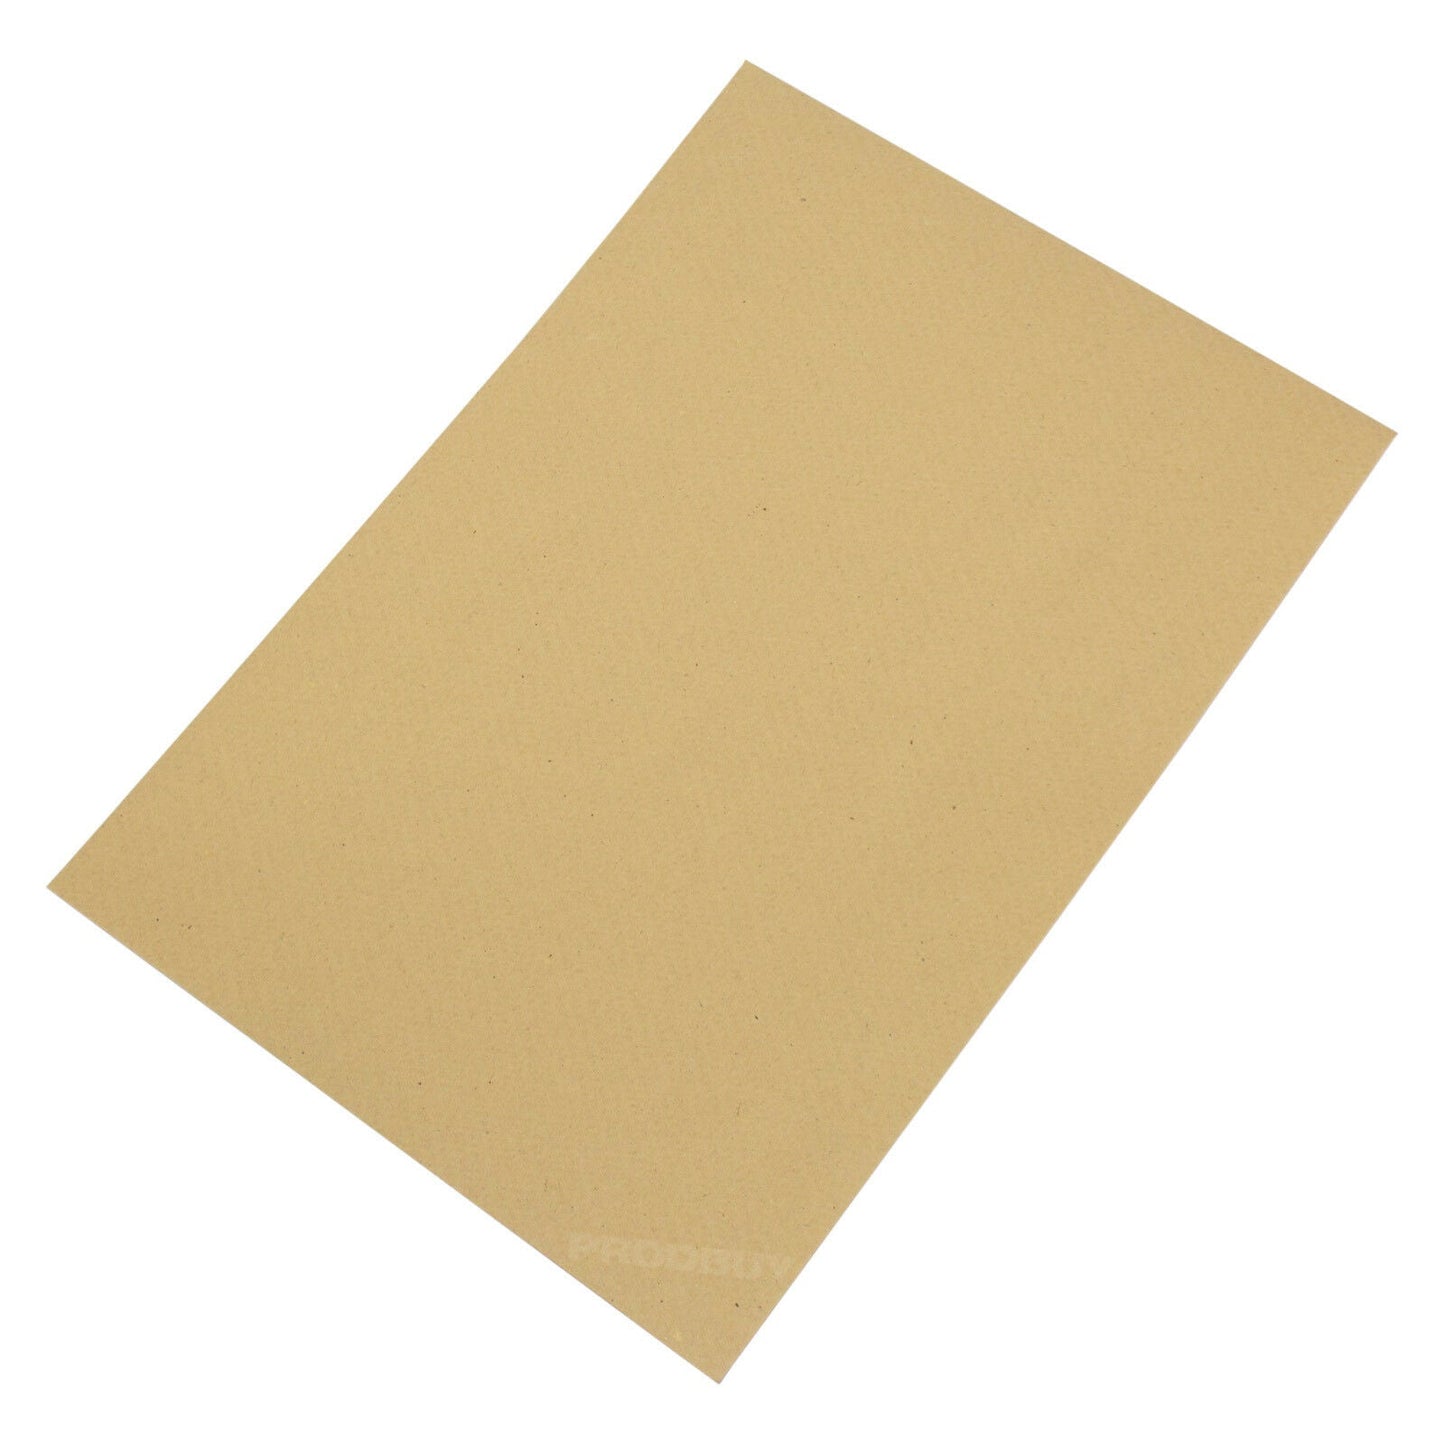 Box of 250 C4 Envelopes Manilla Plain 115gsm Self Seal